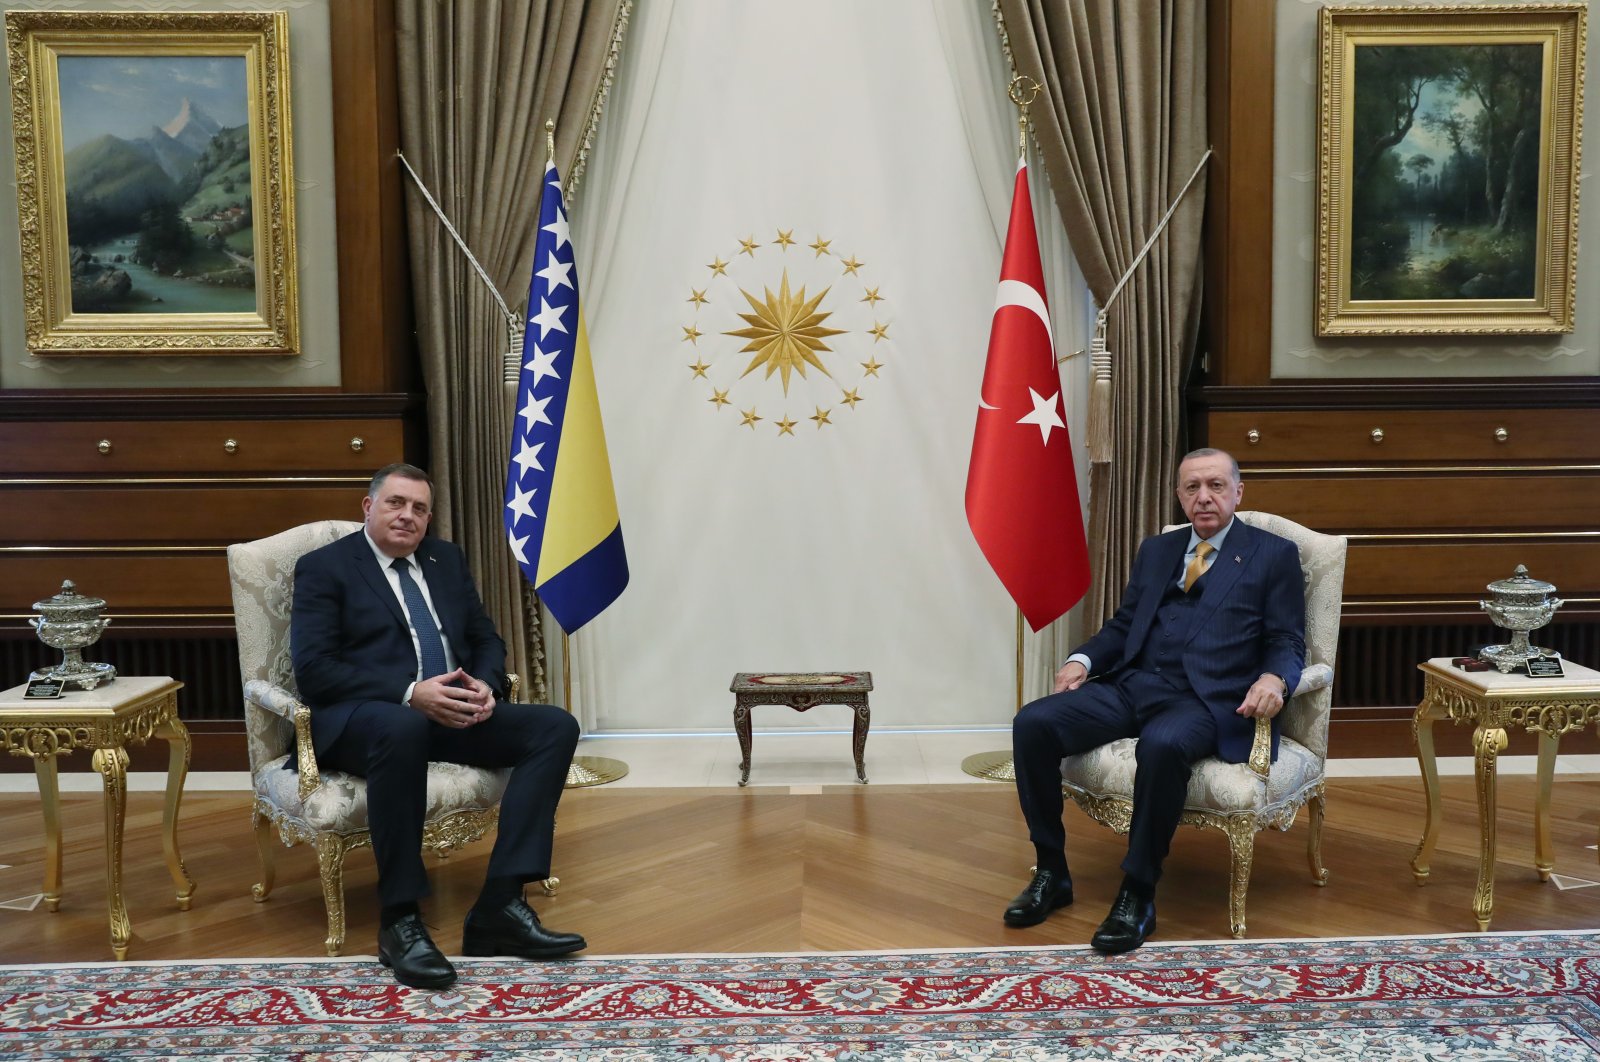 Turki mendukung orang-orang Bosnia di tengah gejolak politik: Wakil Turki